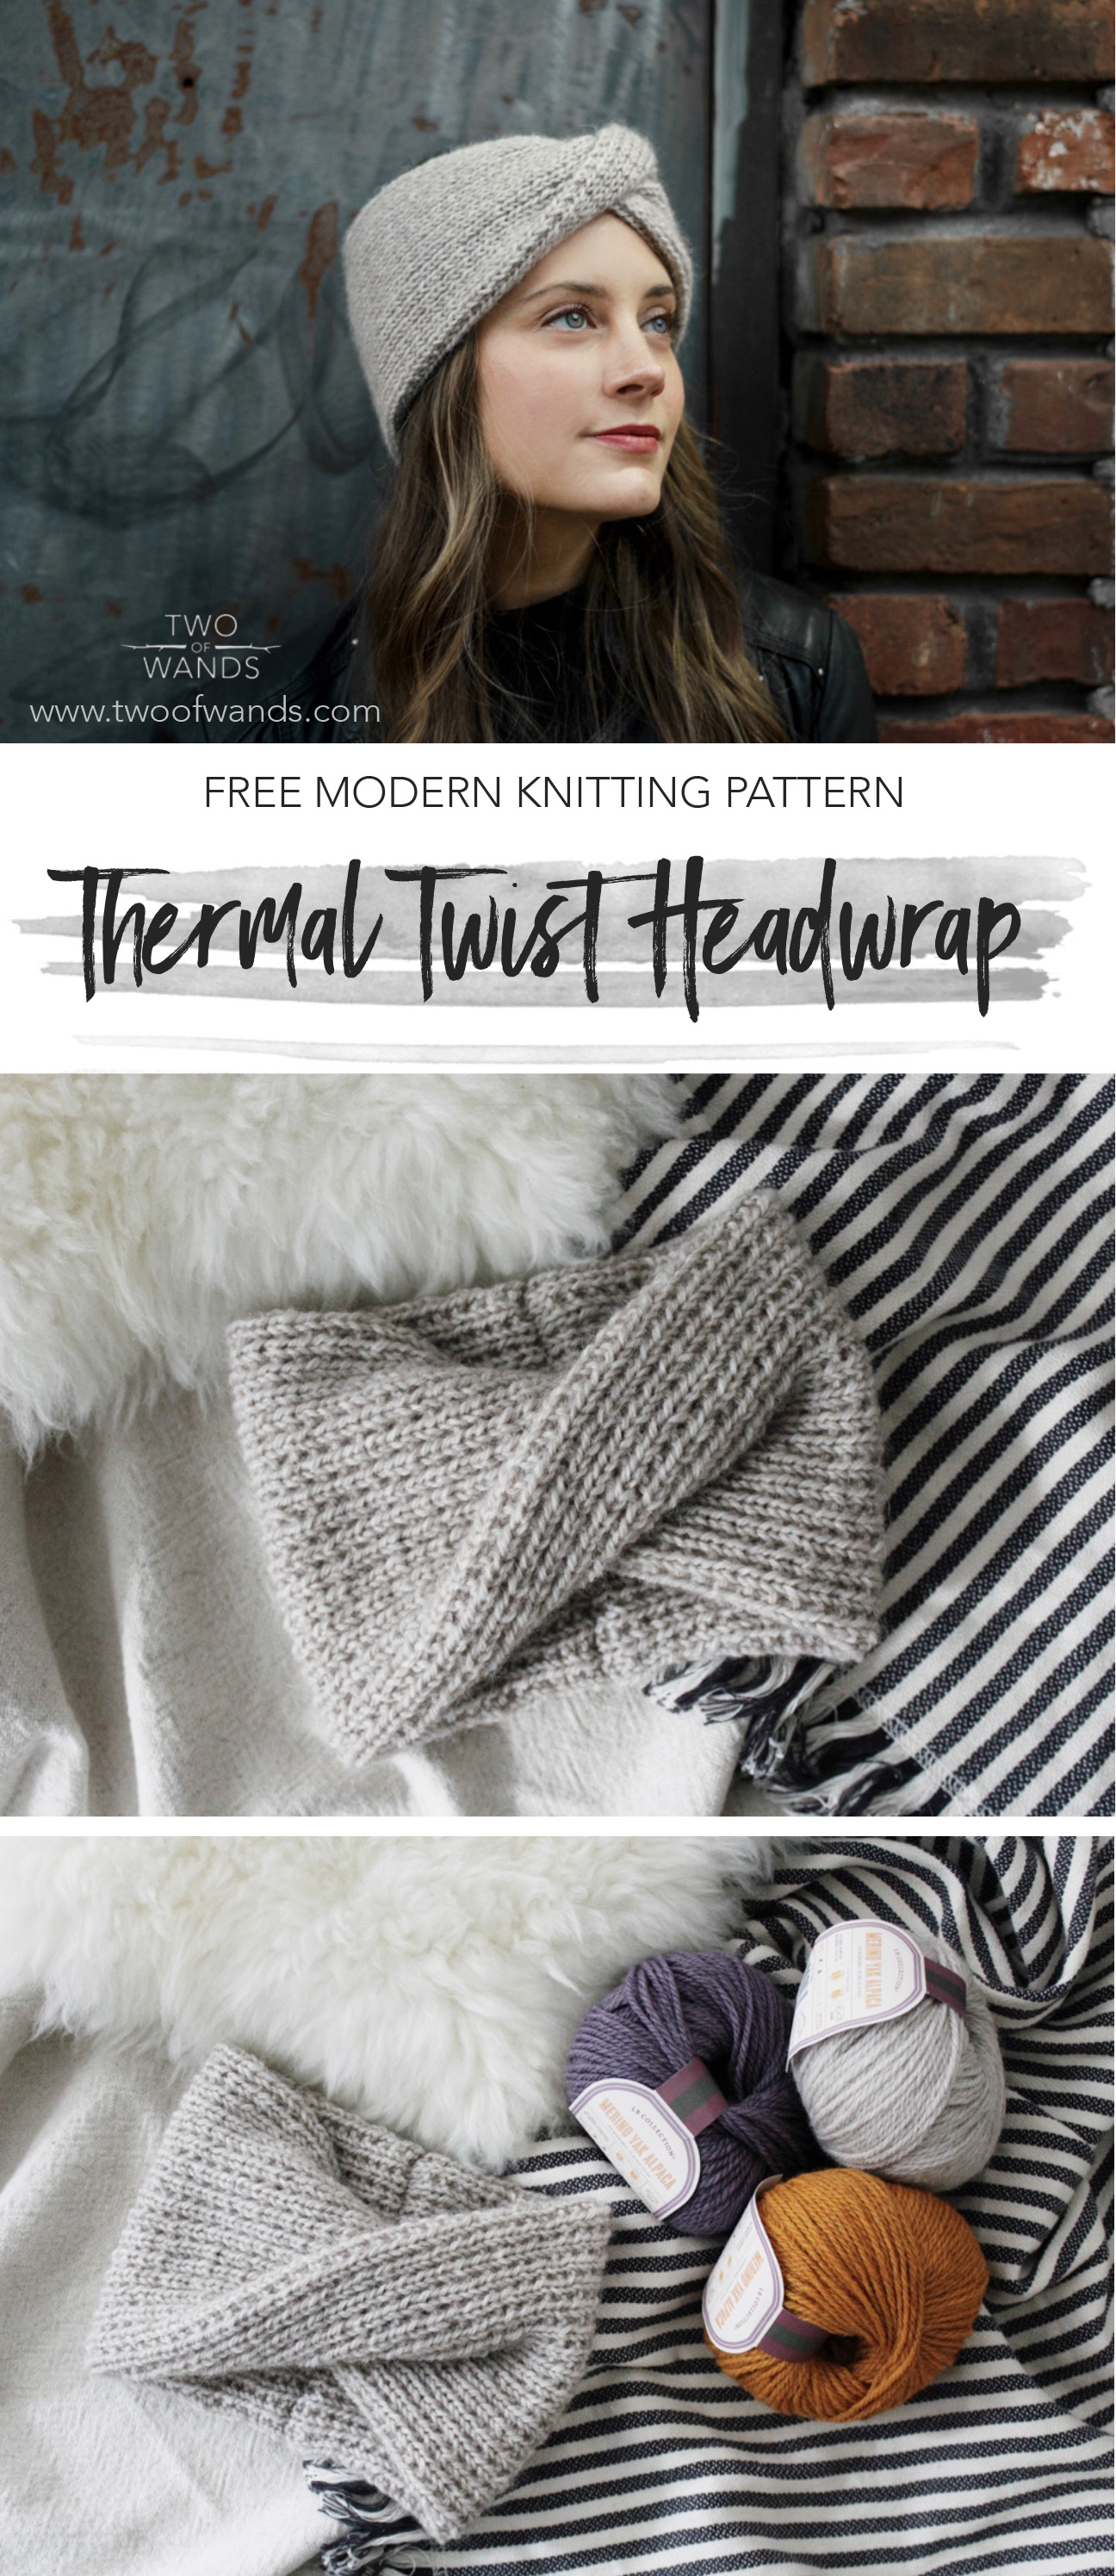 Twisted turban headband knitting pattern